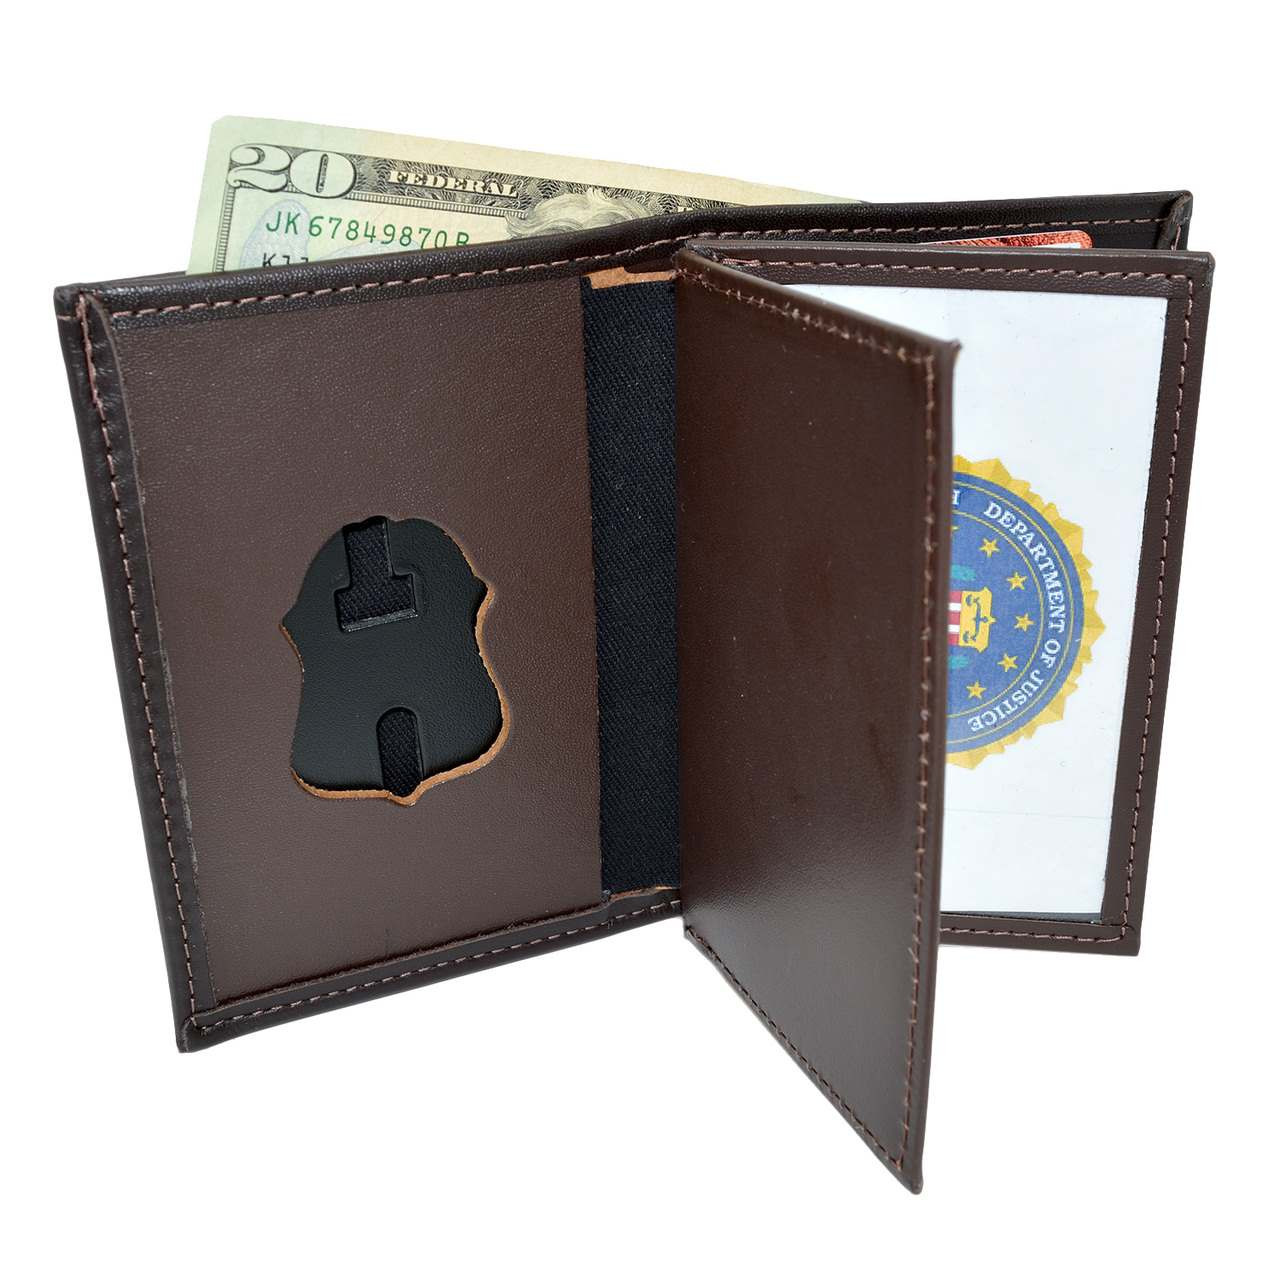 FBI Antique Mini Badge in a Mini Leather Wallet Key Fob was 